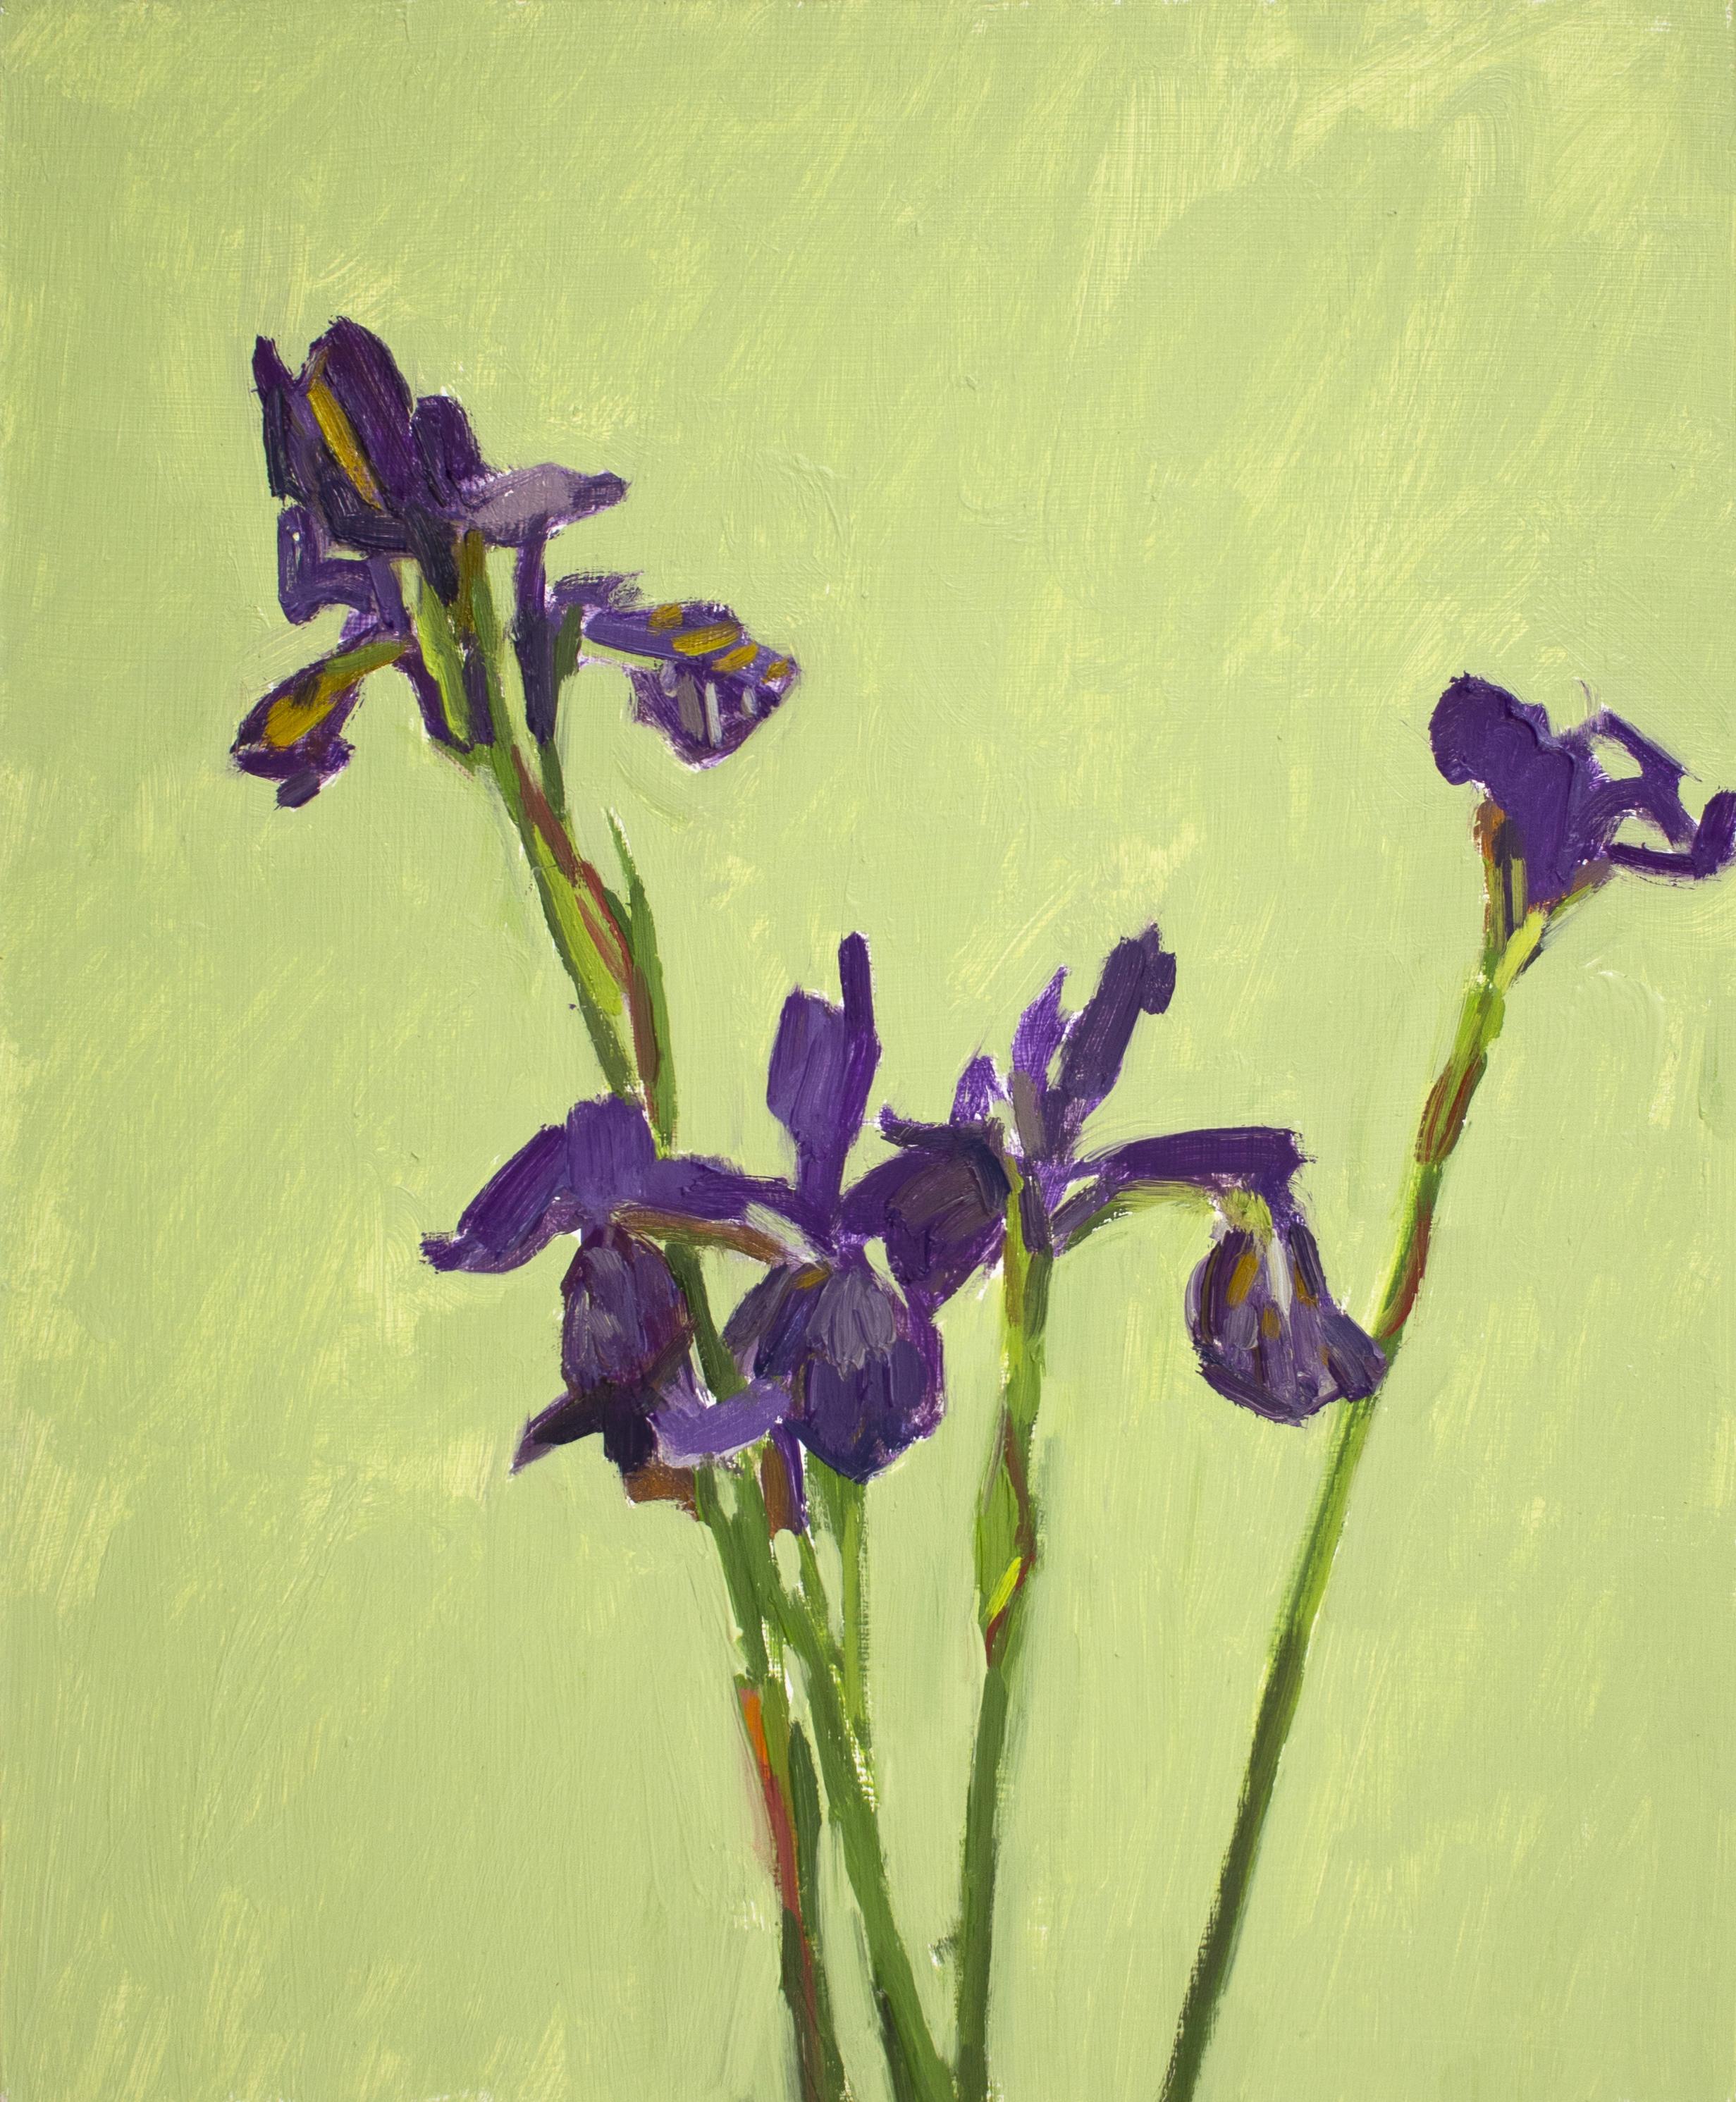 'Delicate Irises' - still life - floral, botanical, impressionism